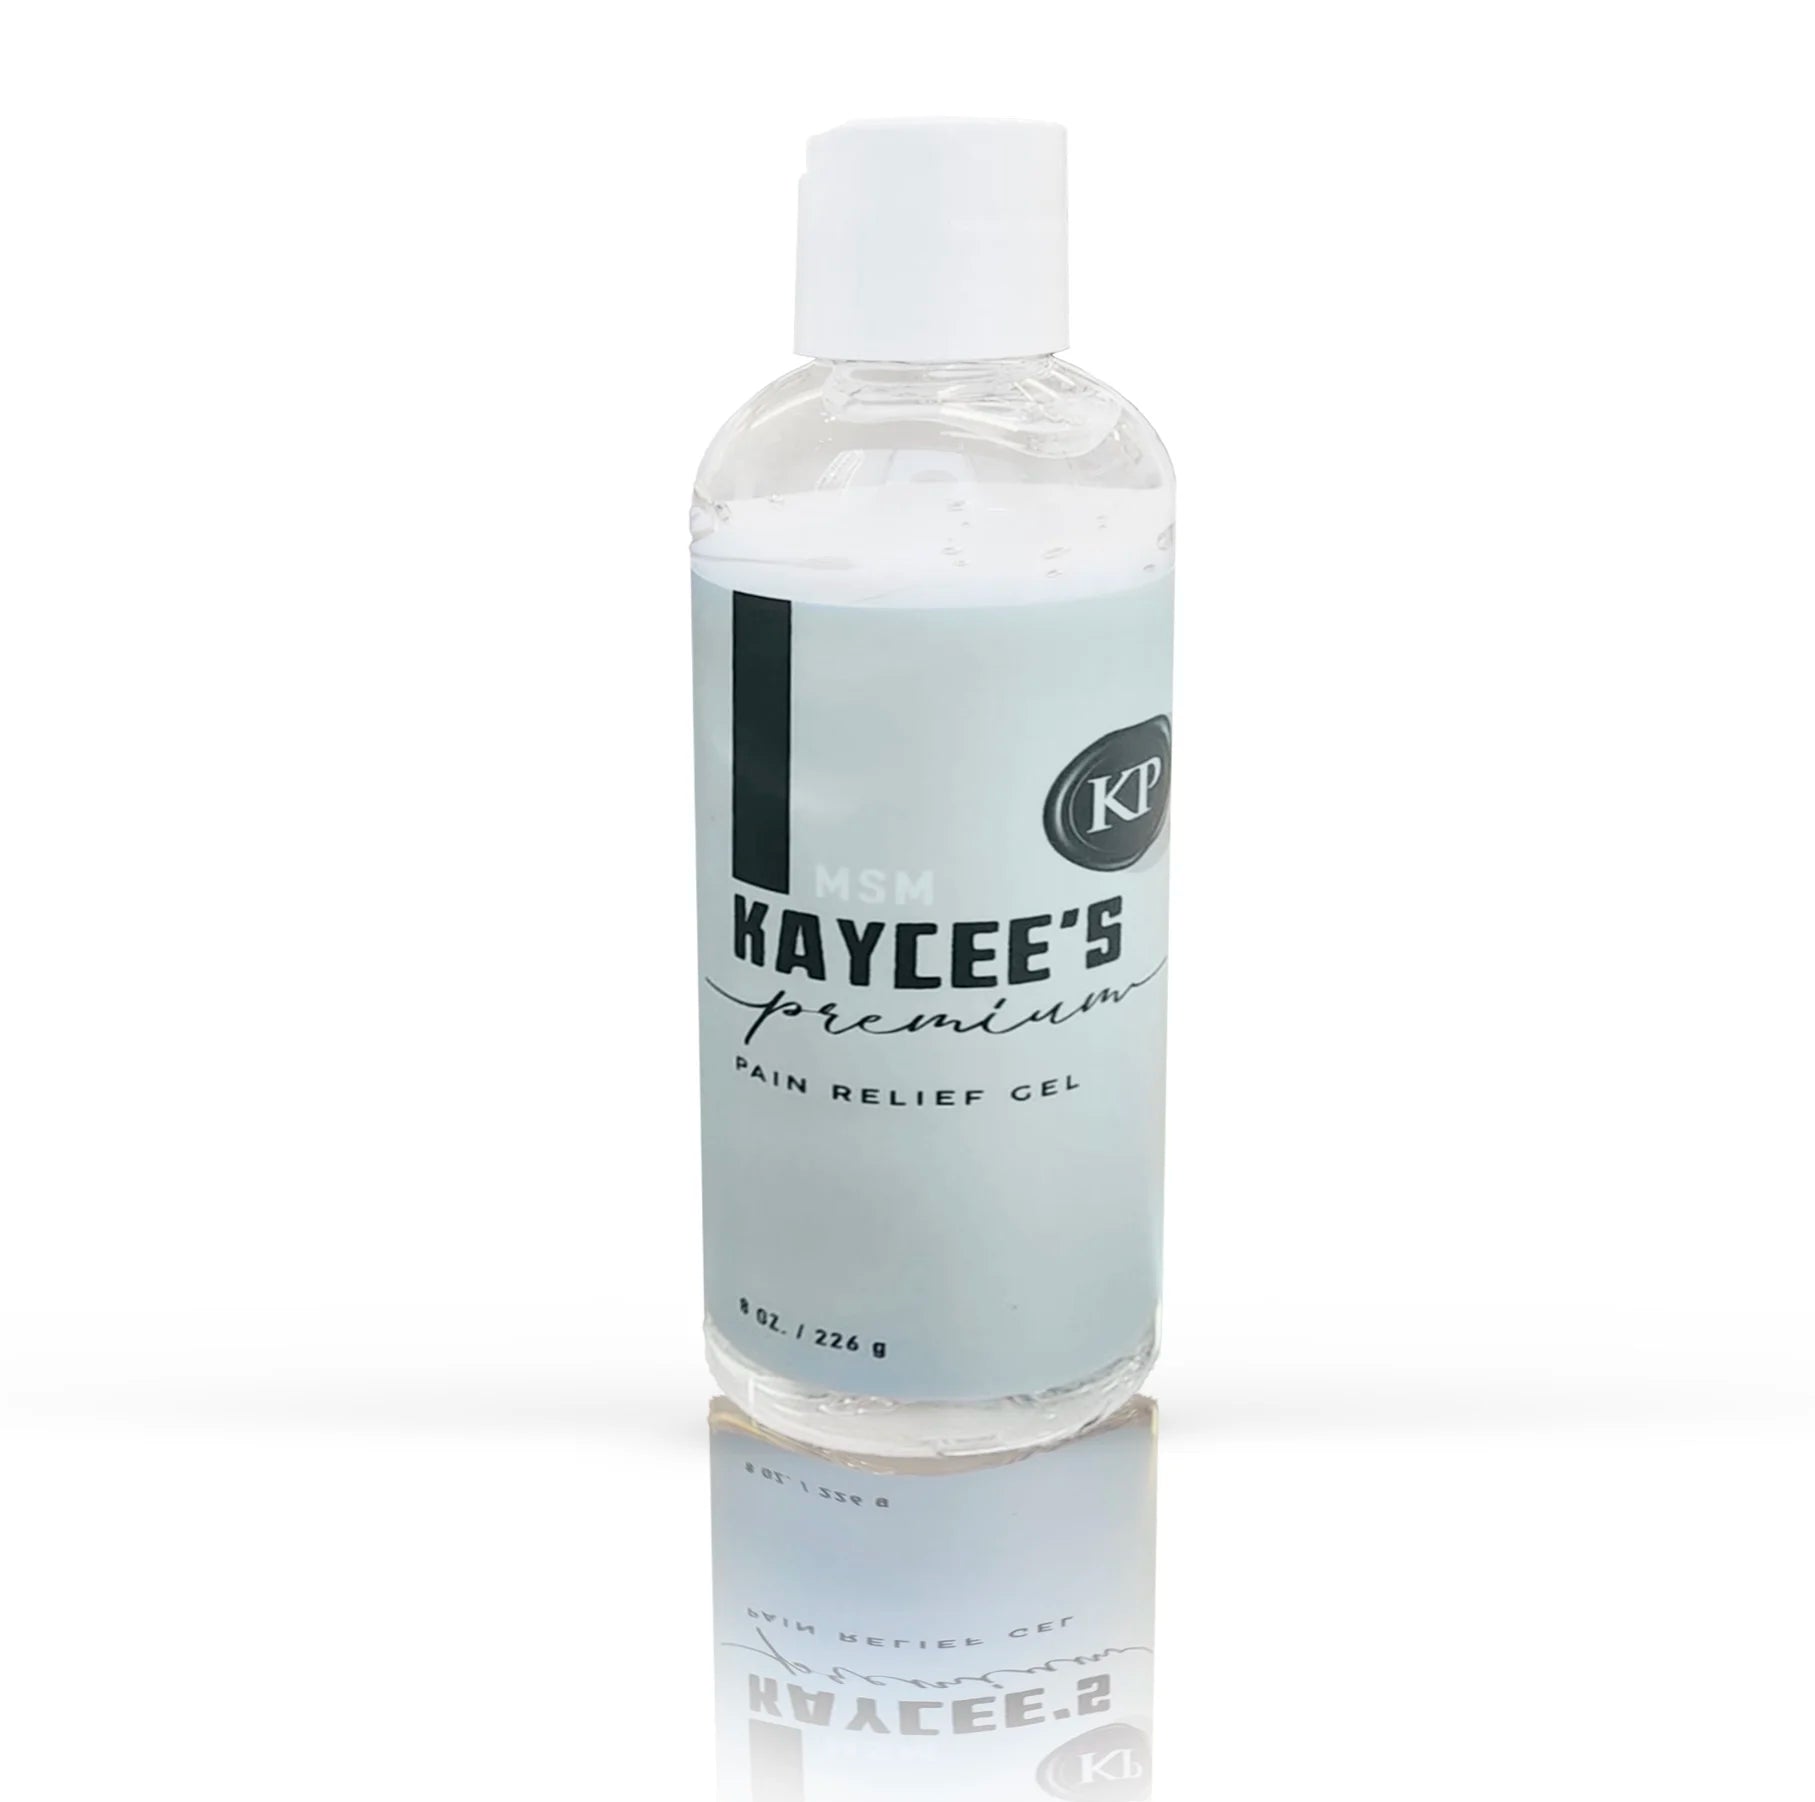 Kaycee’s Premium MSM Pain Relief Gel